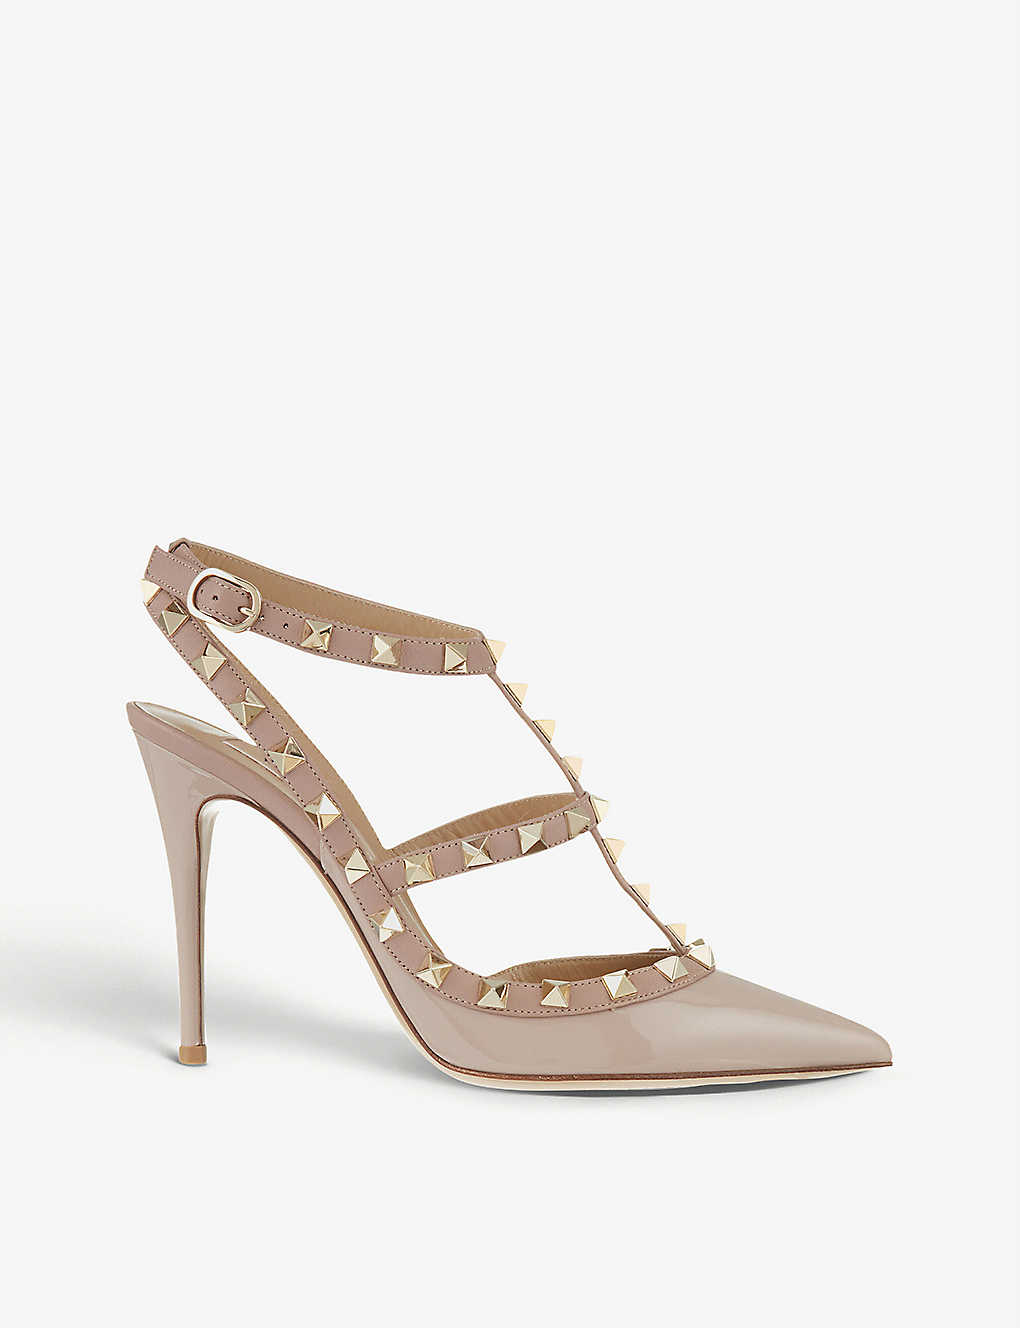 Ashley Furman Mijlpaal Staren VALENTINO GARAVANI - So Noir rockstud patent-leather heeled sandals |  Selfridges.com